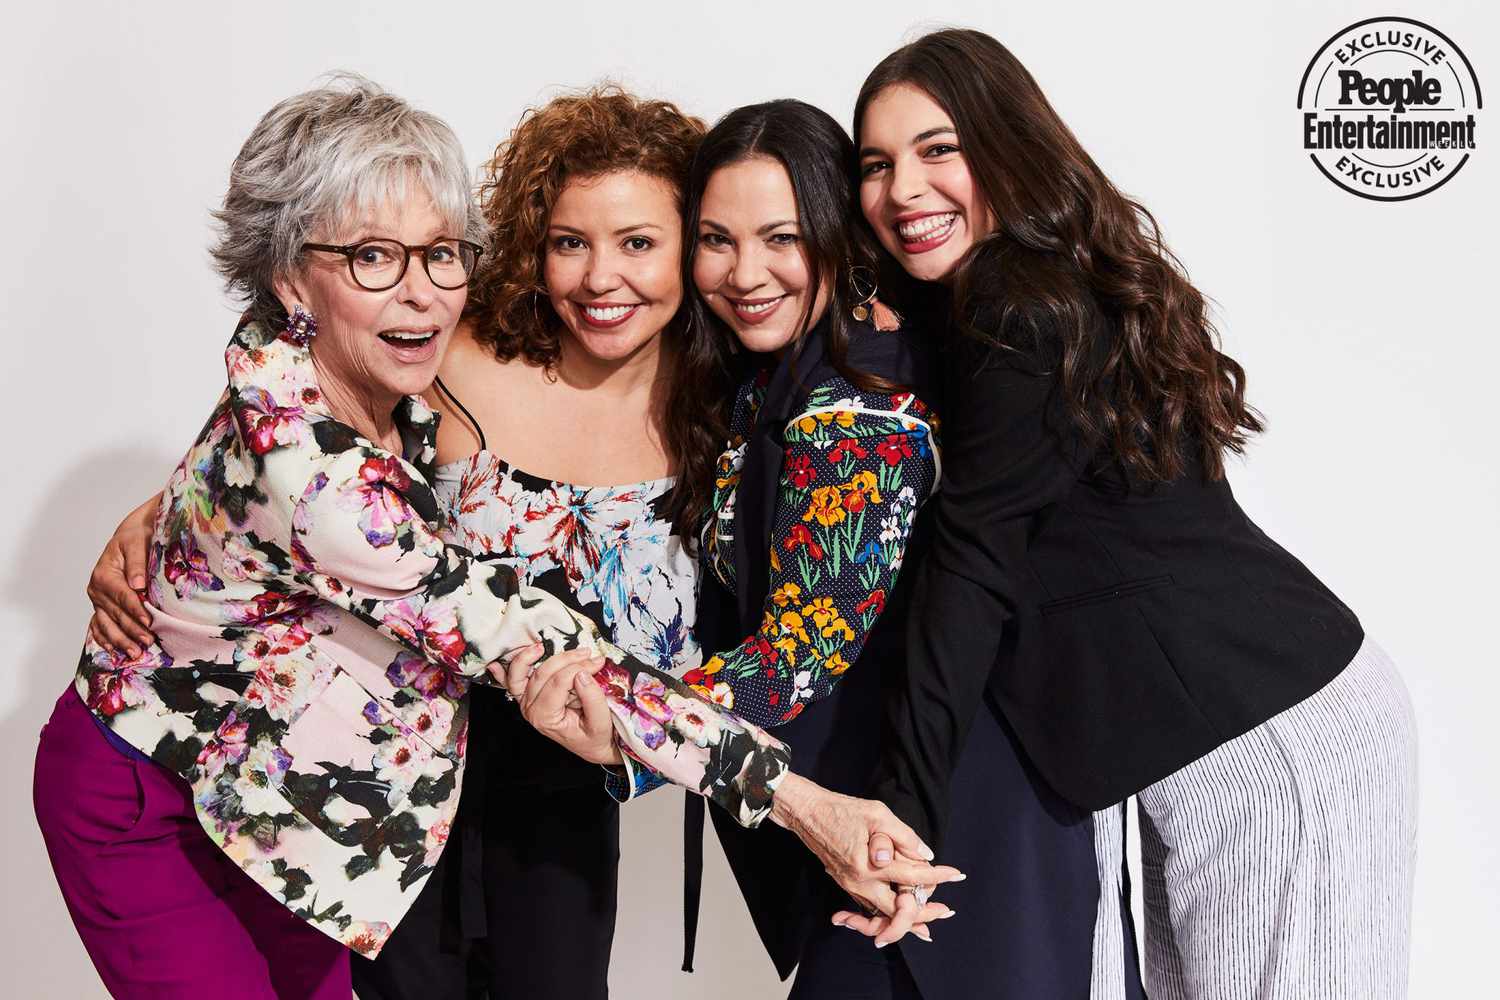 One Day at a Time stars Rita Moreno, Justina Machado, and Isabella Gomez with creator Gloria Calderon Kellett